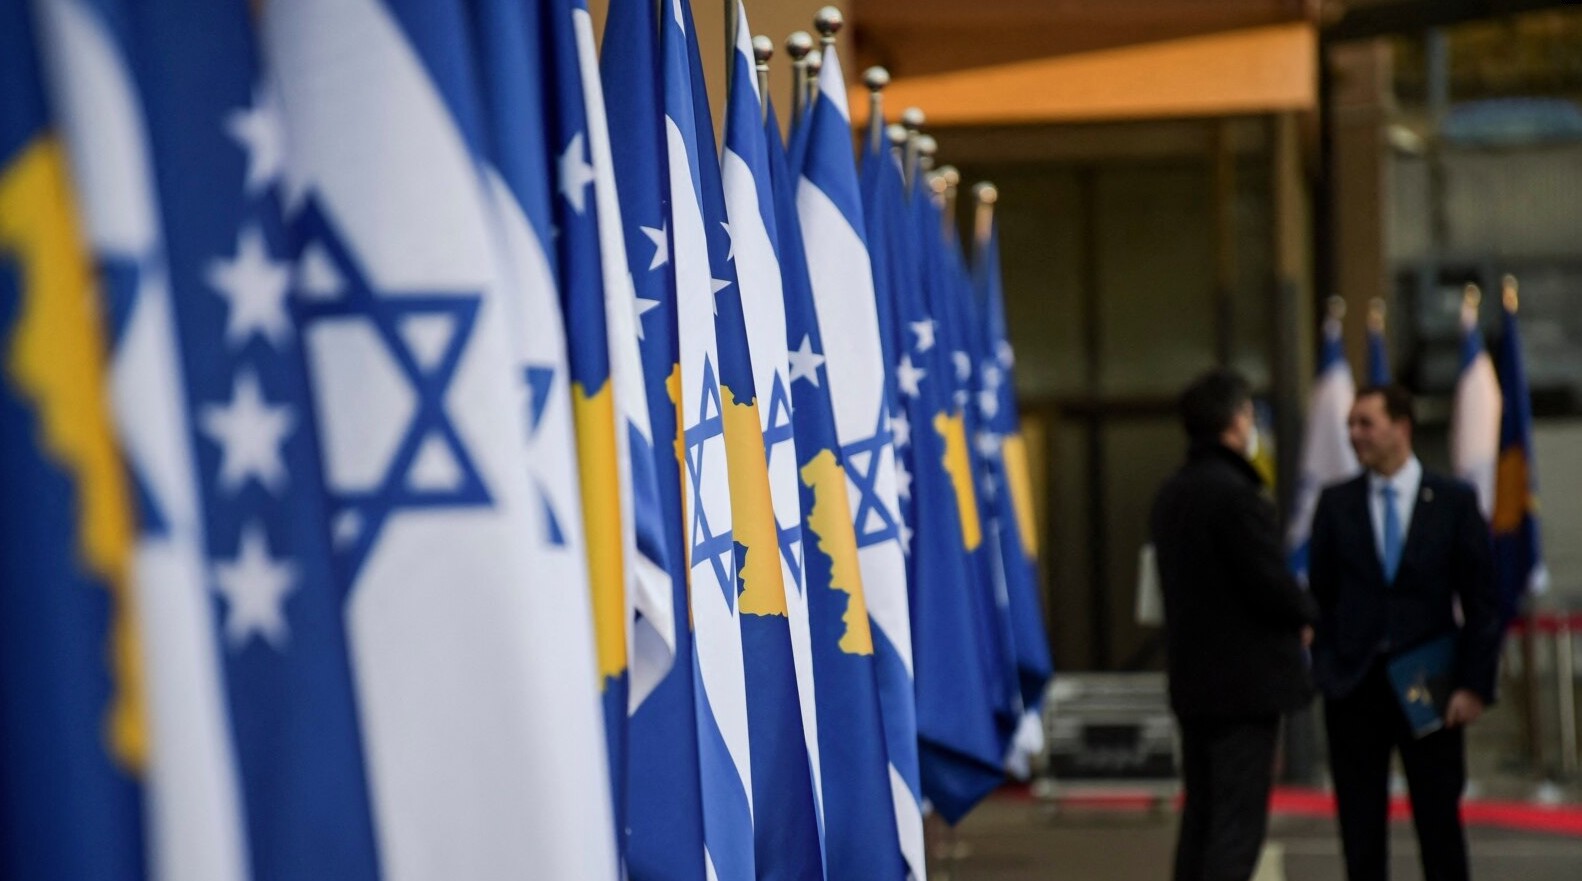 Thellohen marrëdhëniet Kosovë-Izrael